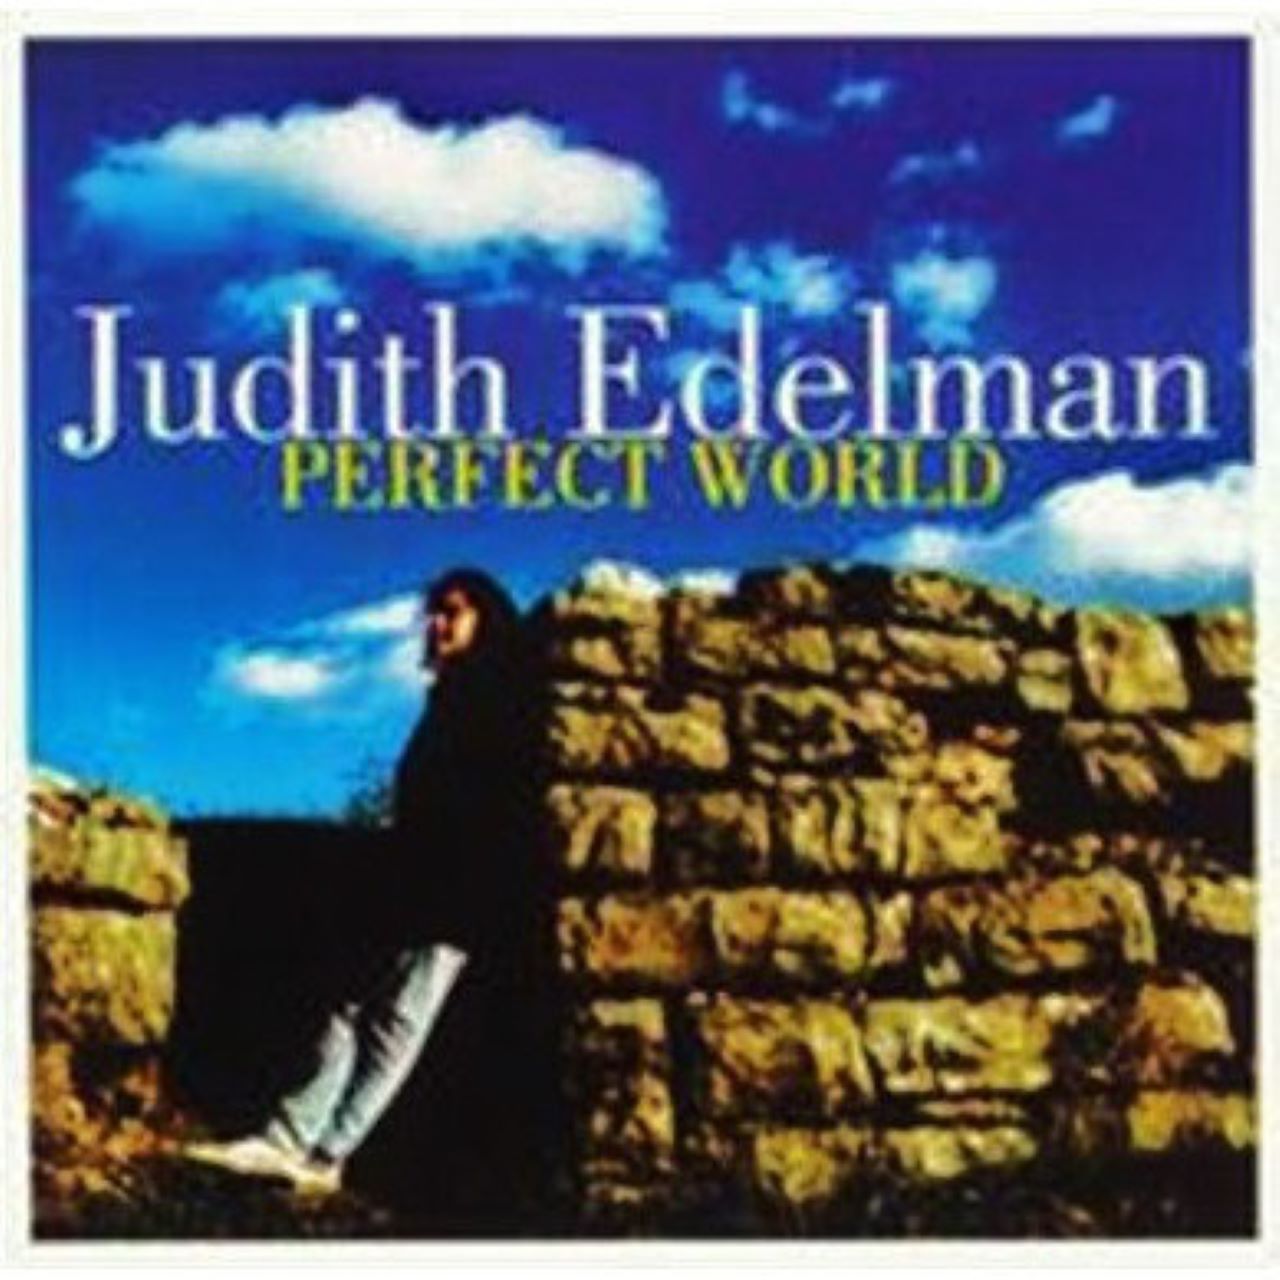 Judith Edelman – Perfect World cover album